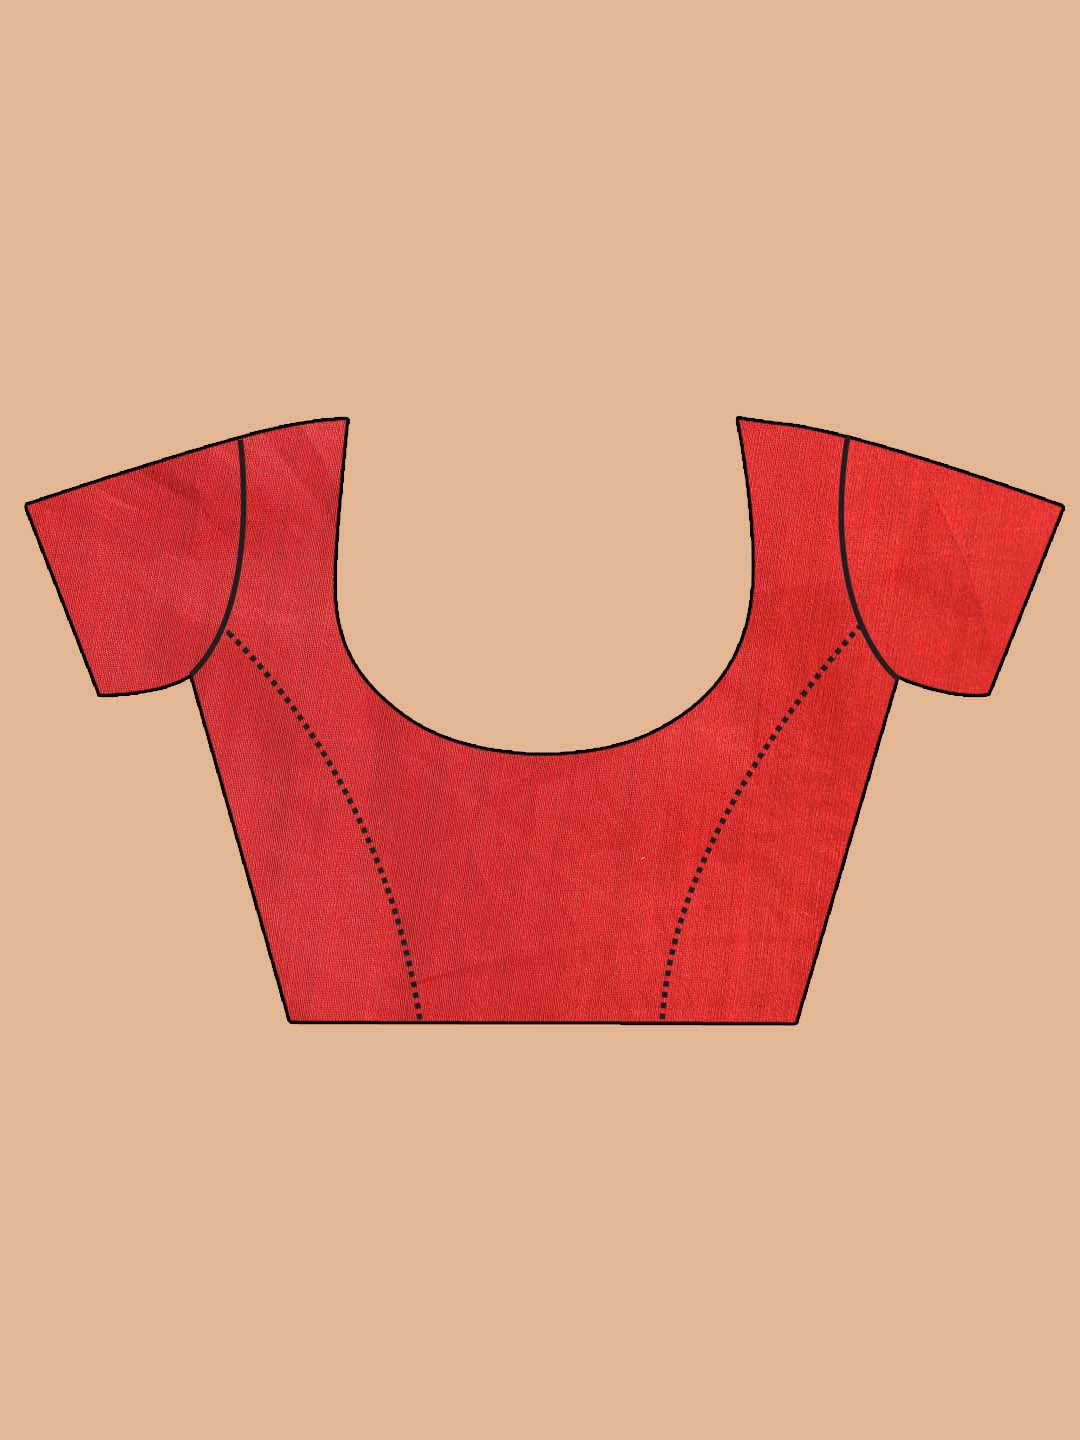 Indethnic Banarasi Red Solid Work Wear Saree - Blouse Piece View